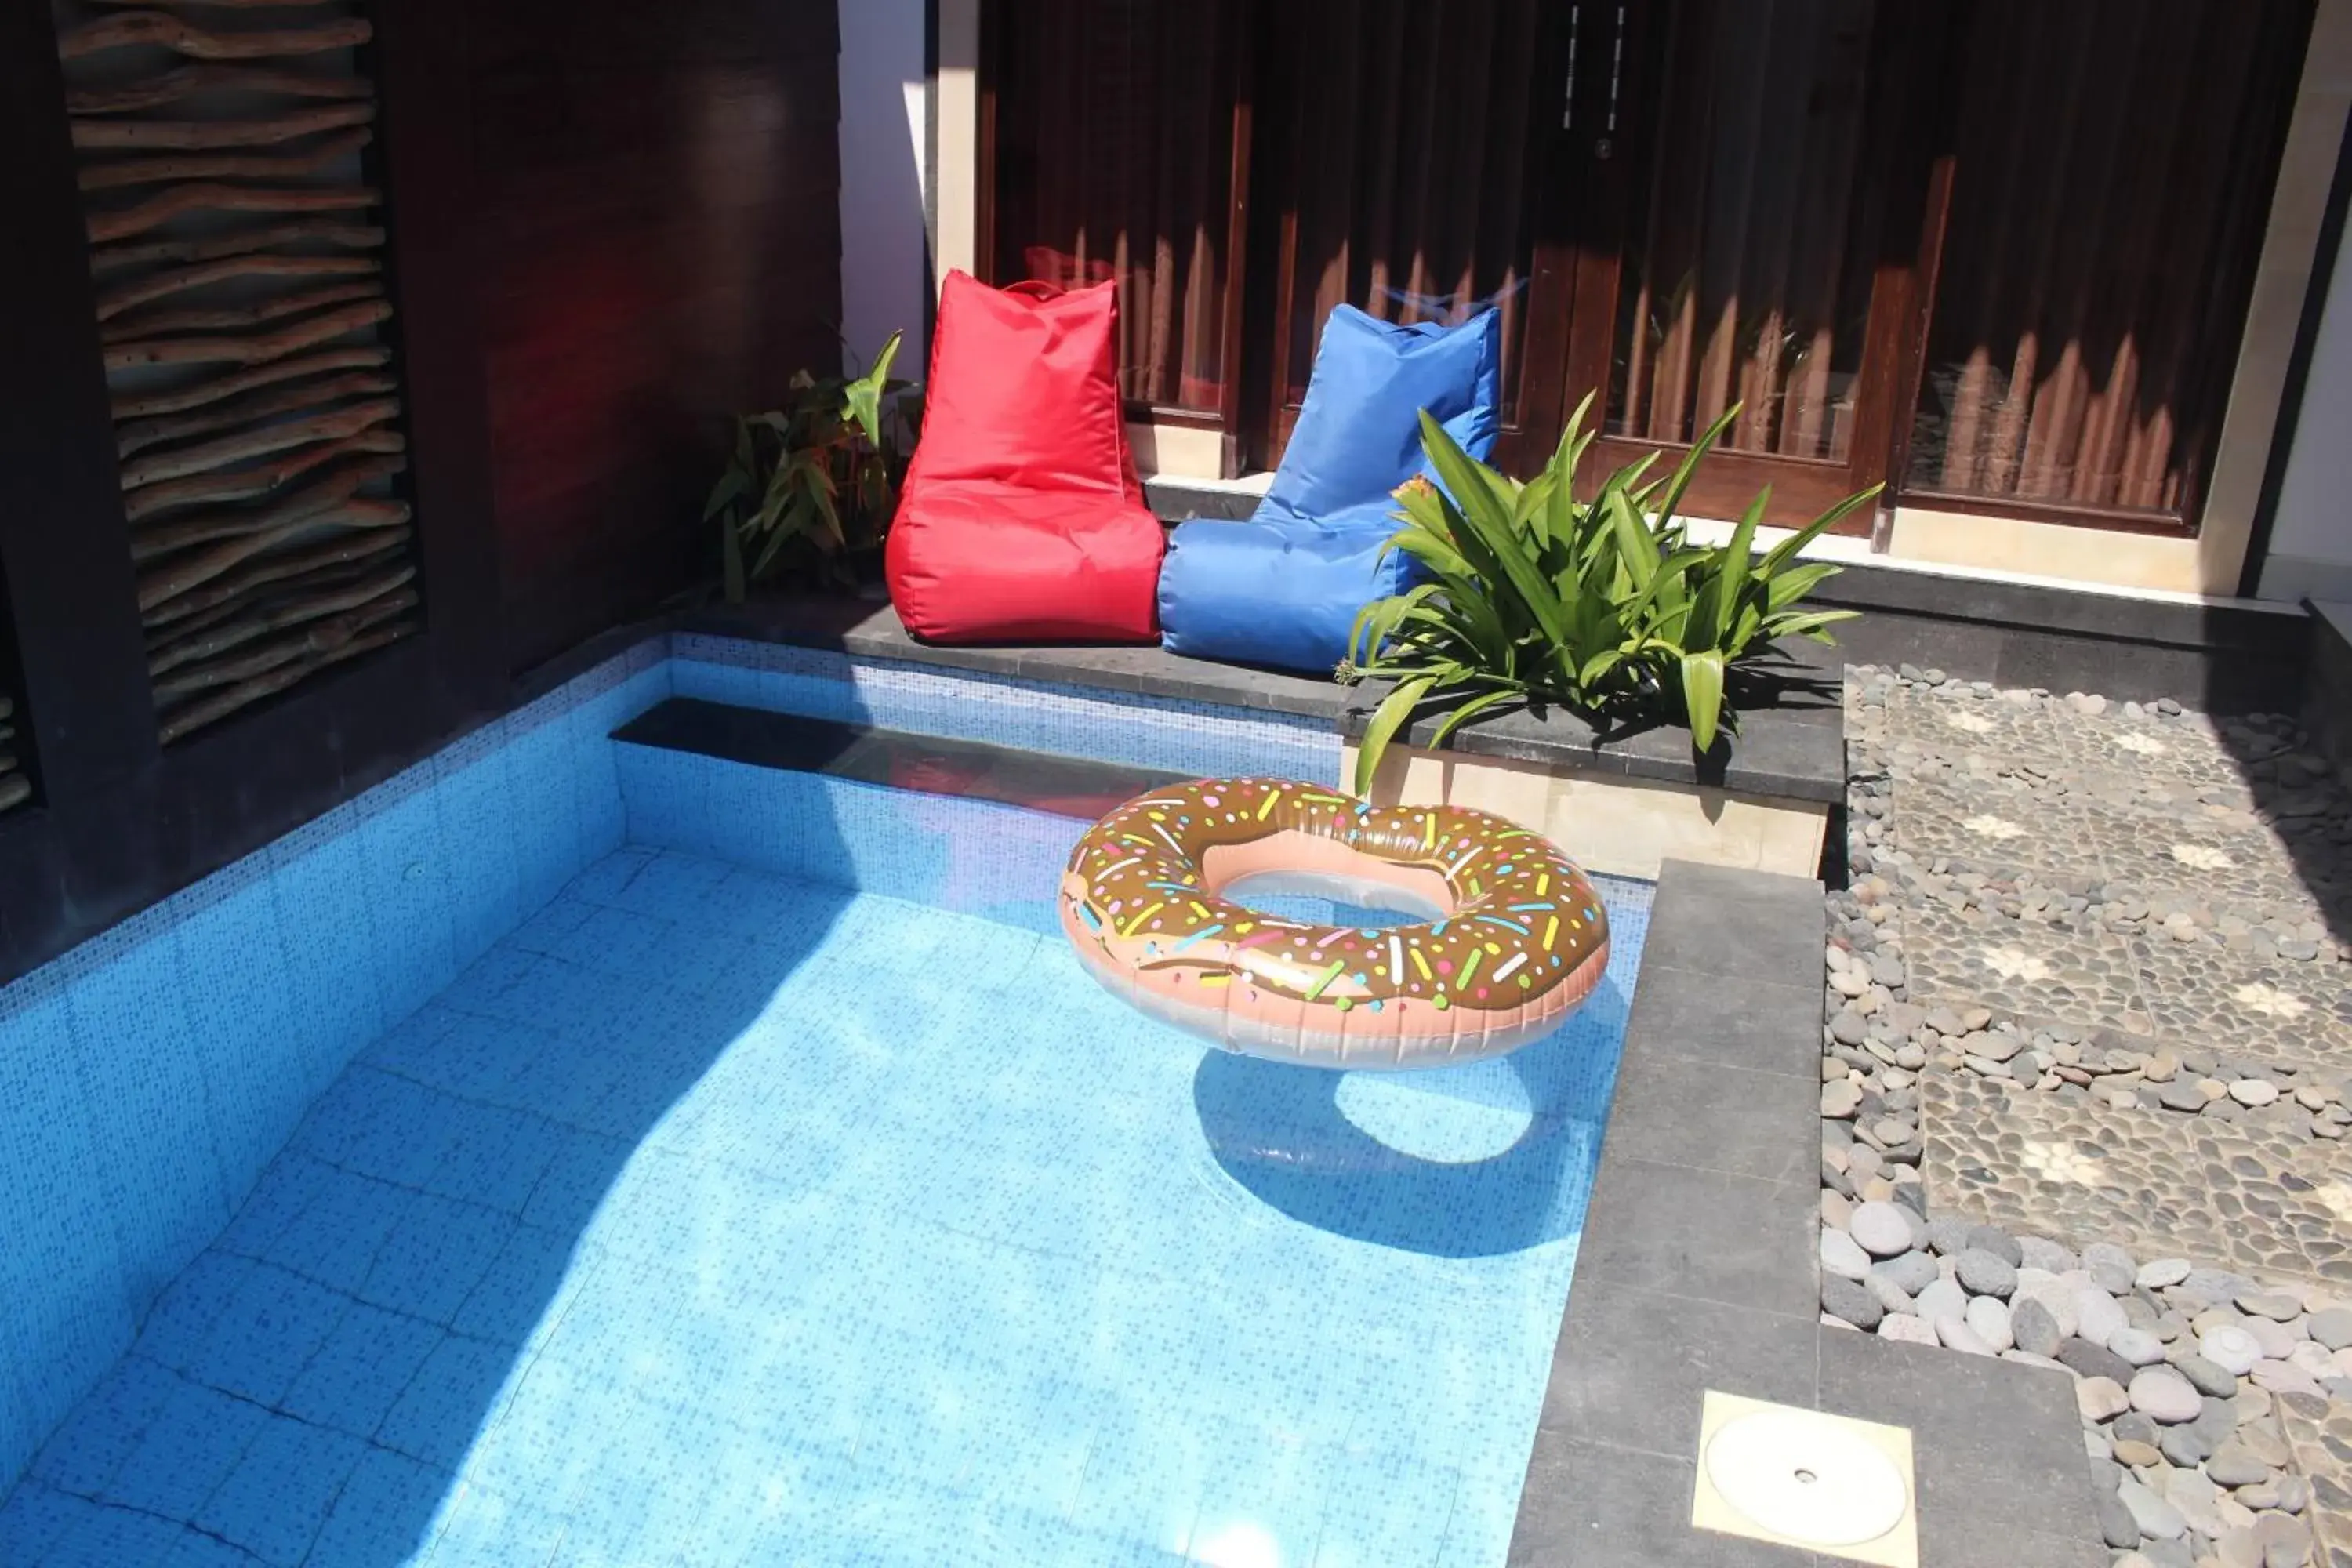 Swimming Pool in Jukung Villas Kuta